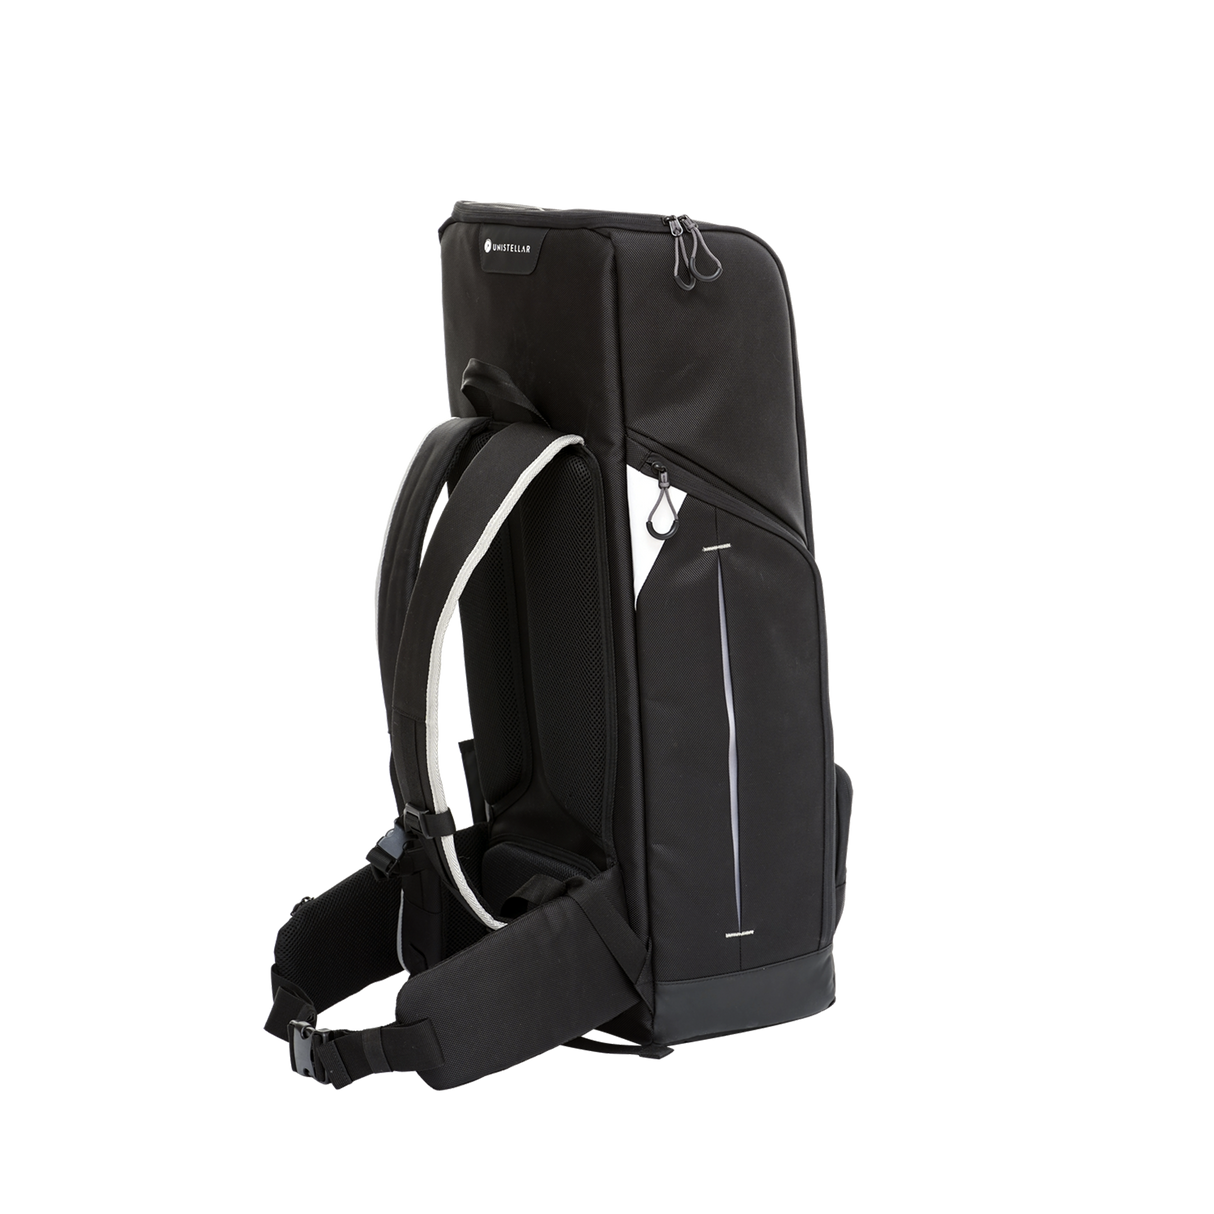 Bundle Unistellar eQuinox 2 - smart telescope + backpack